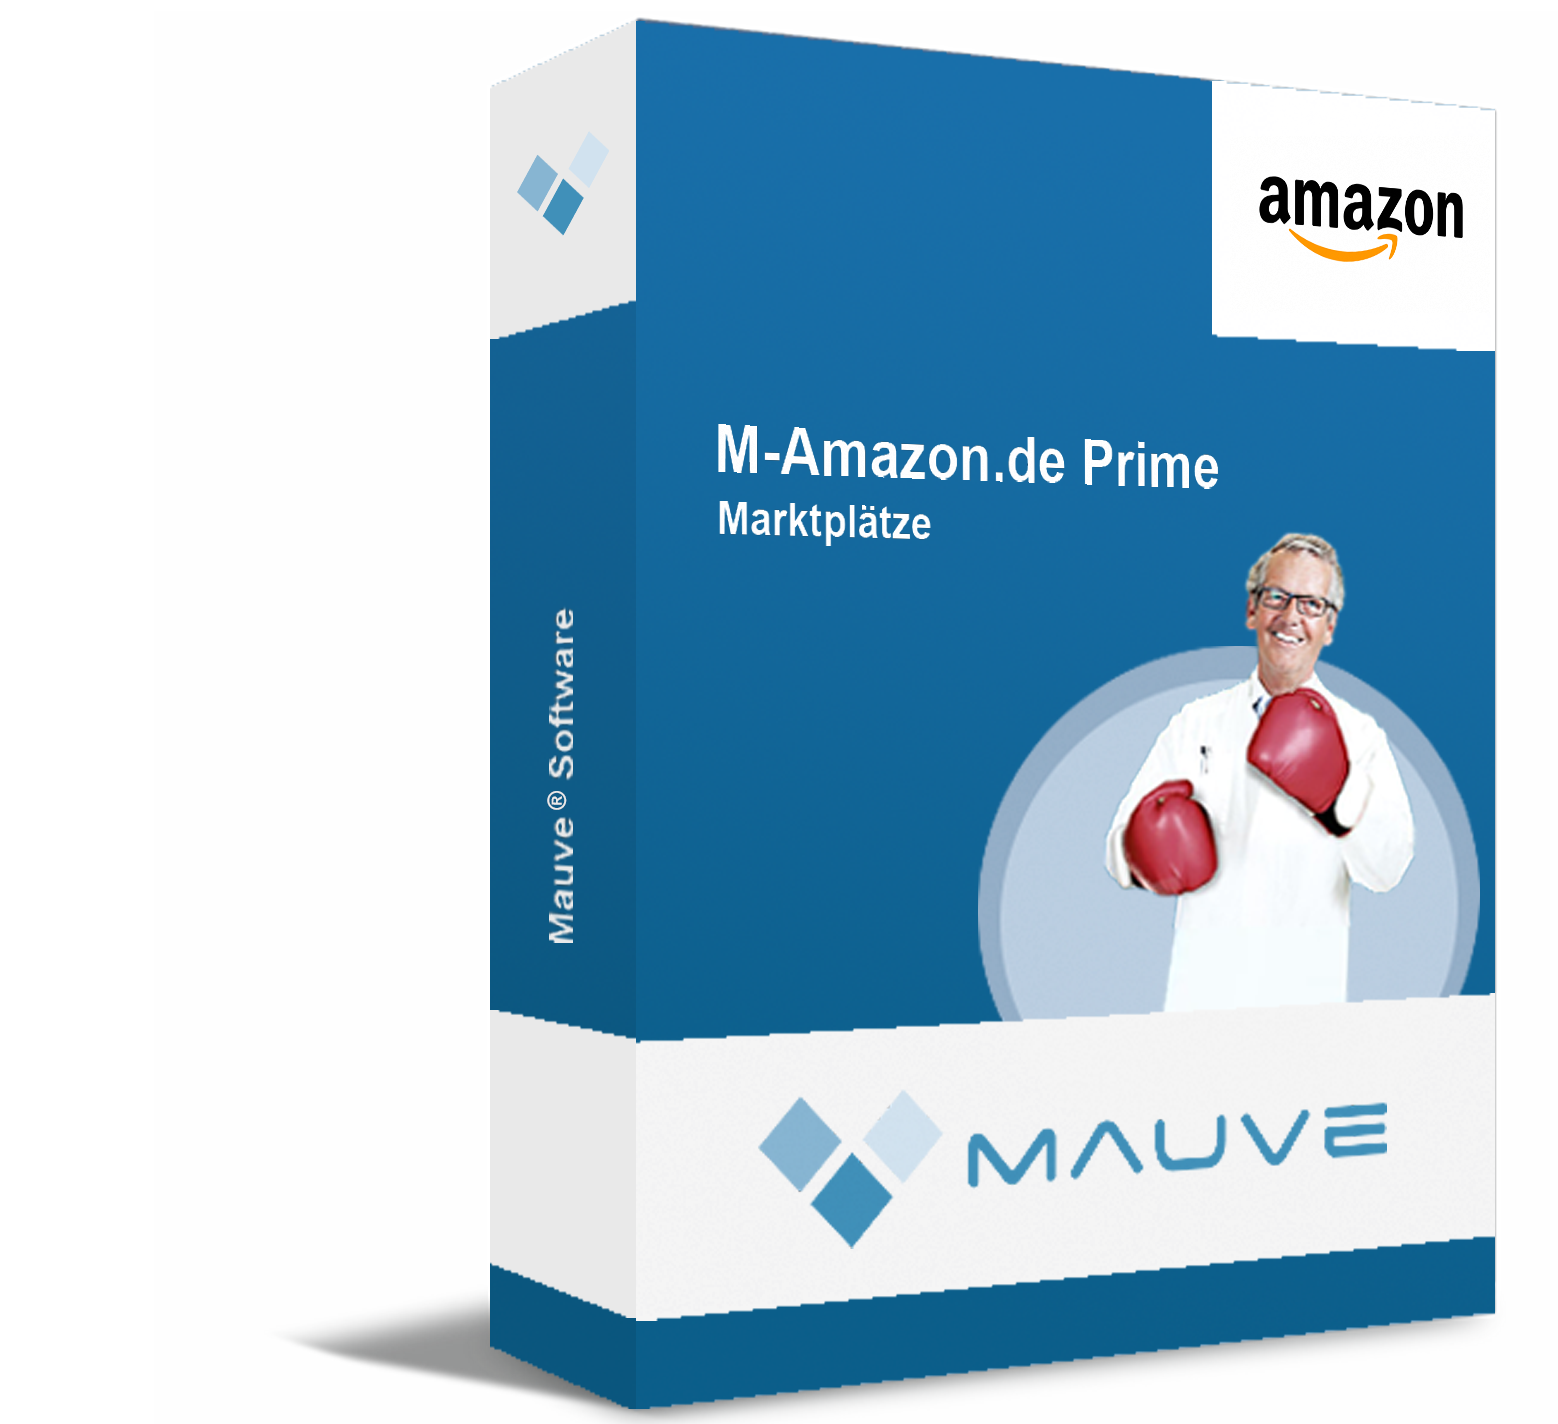 M-Amazon.de Prime